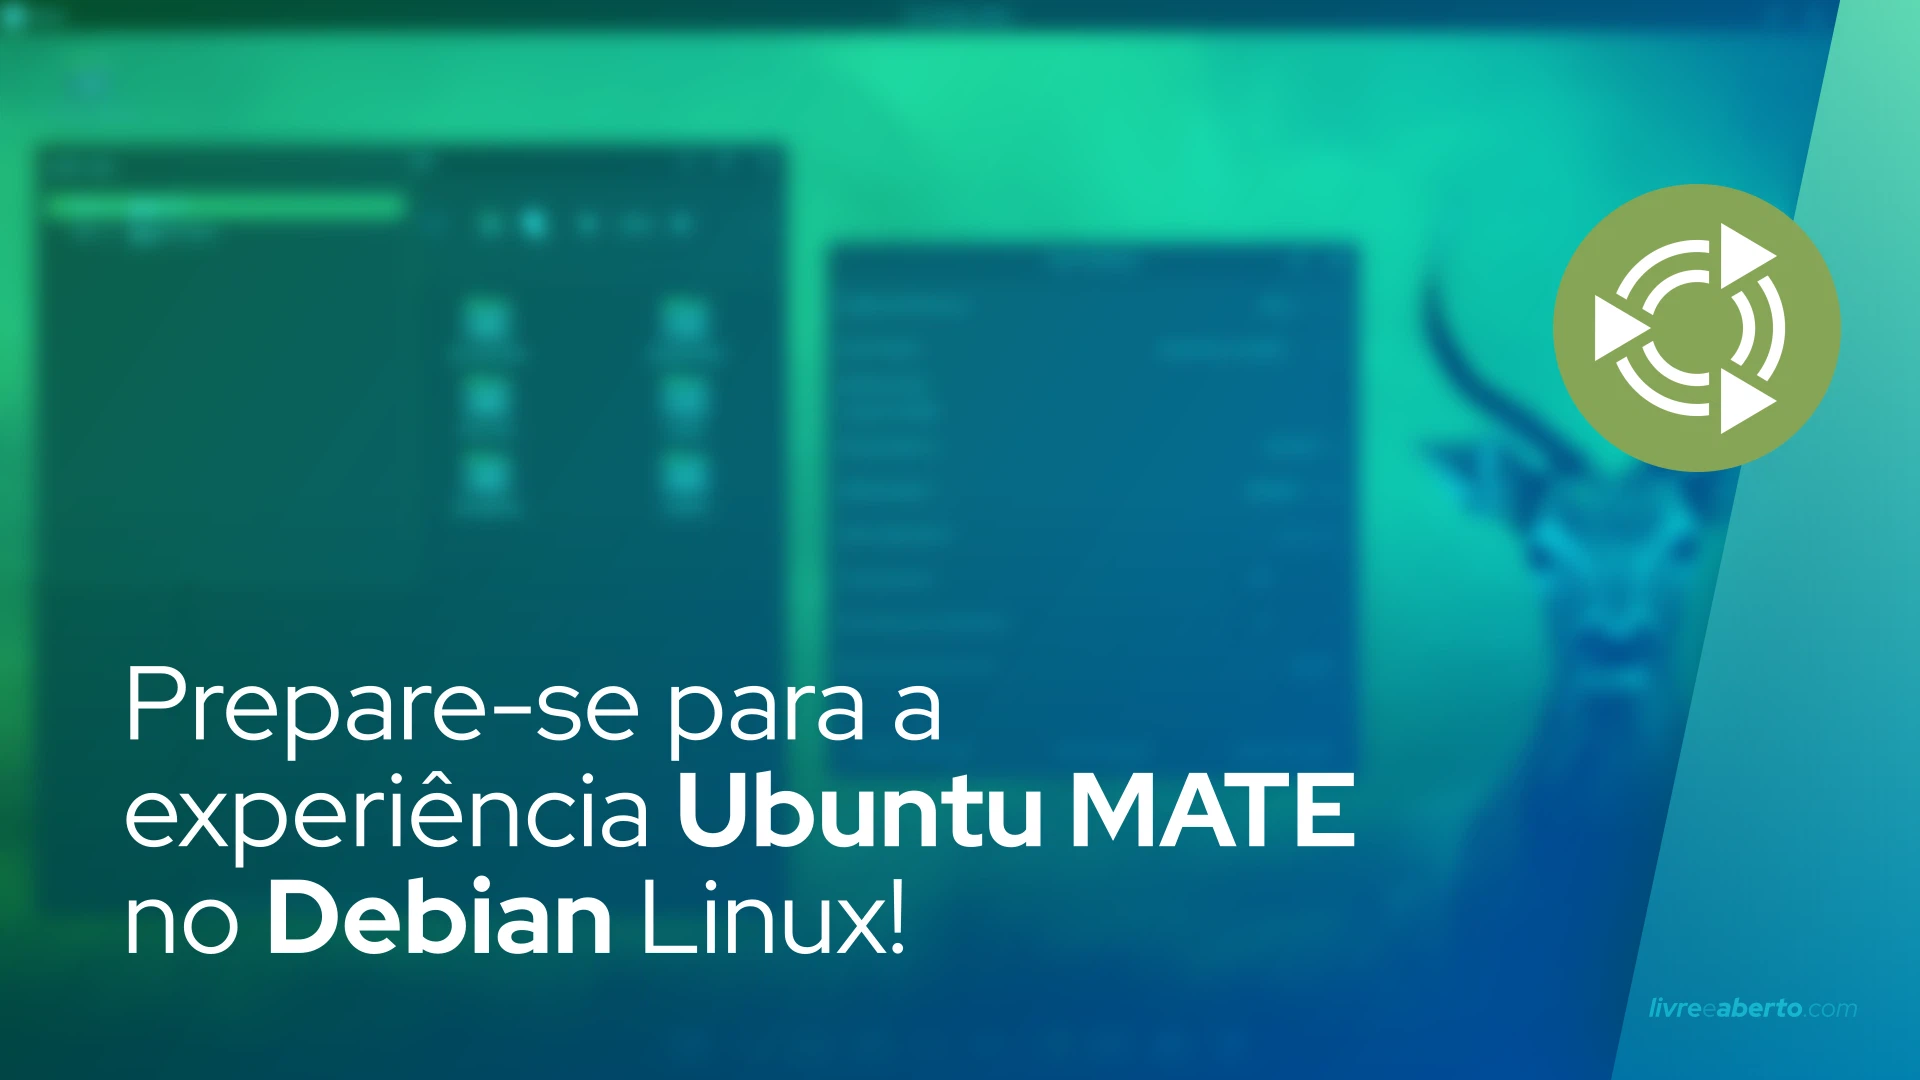 Prepare-se para a experiência Ubuntu MATE no Debian Linux!